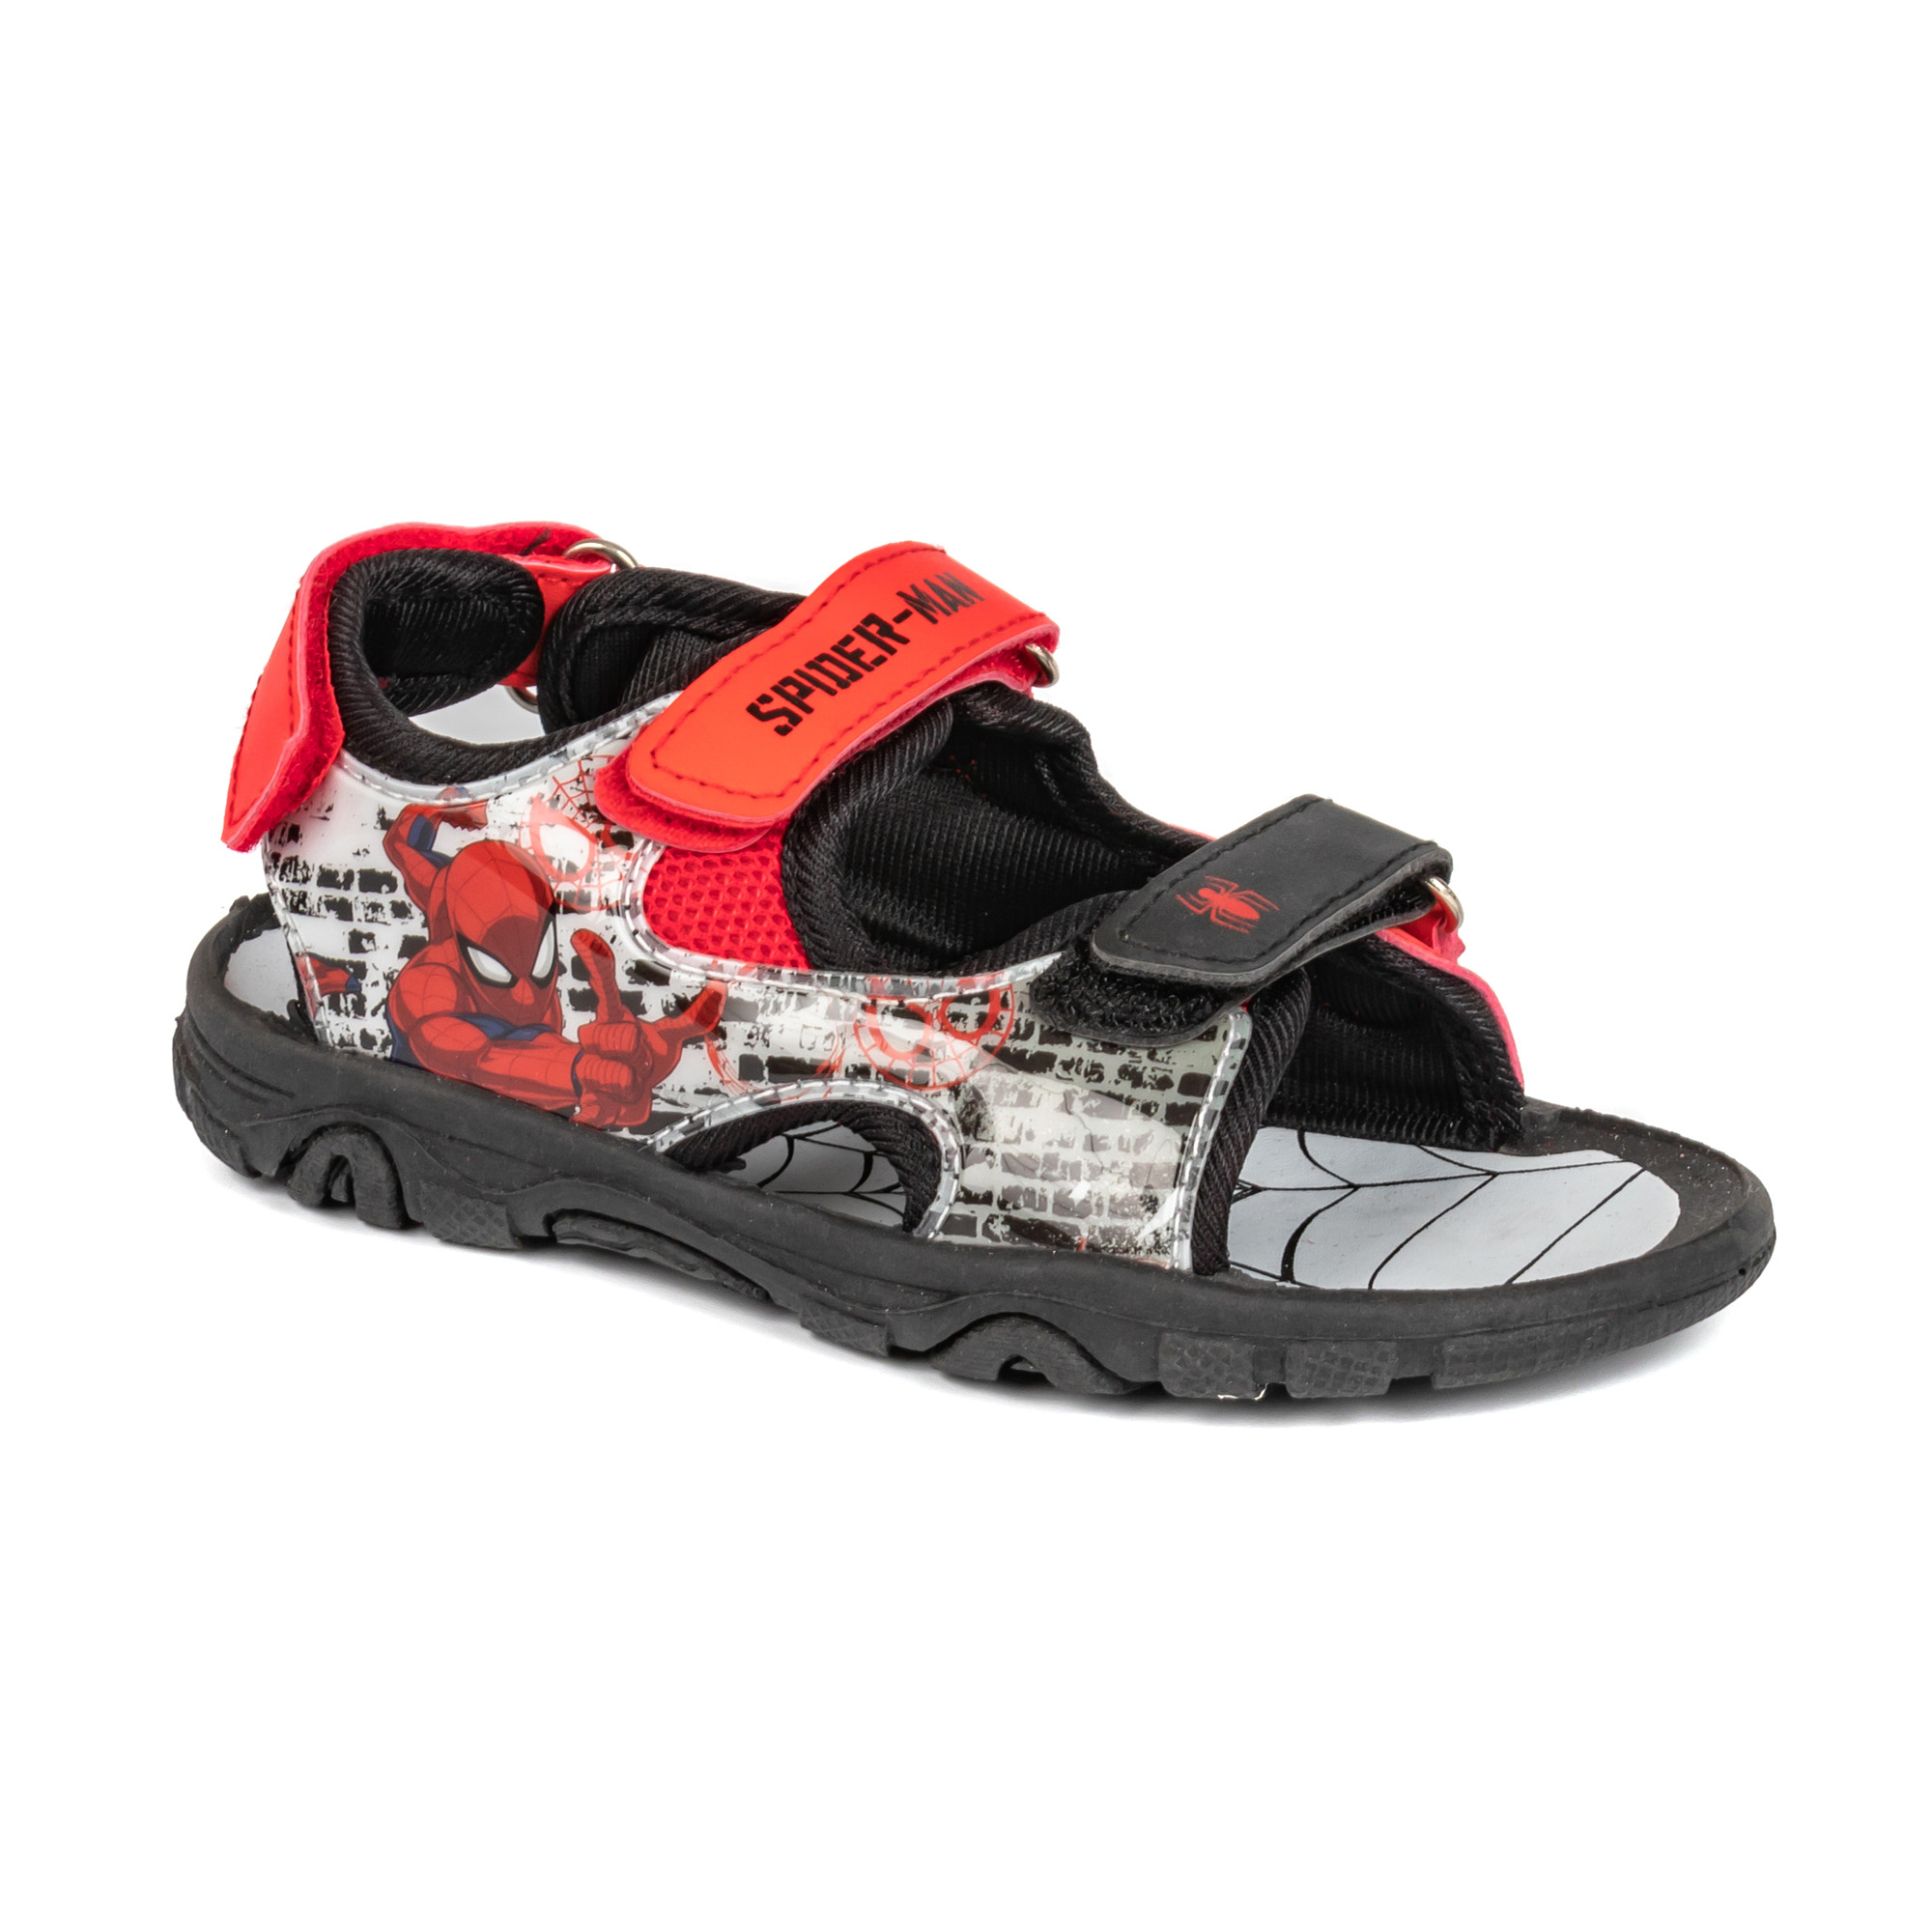 Kid shoes,Sneaker Shoes, Children Shoes, Sandals,beach Sandals  Black/Red Pu upper, PU Velcro EVA Outsole